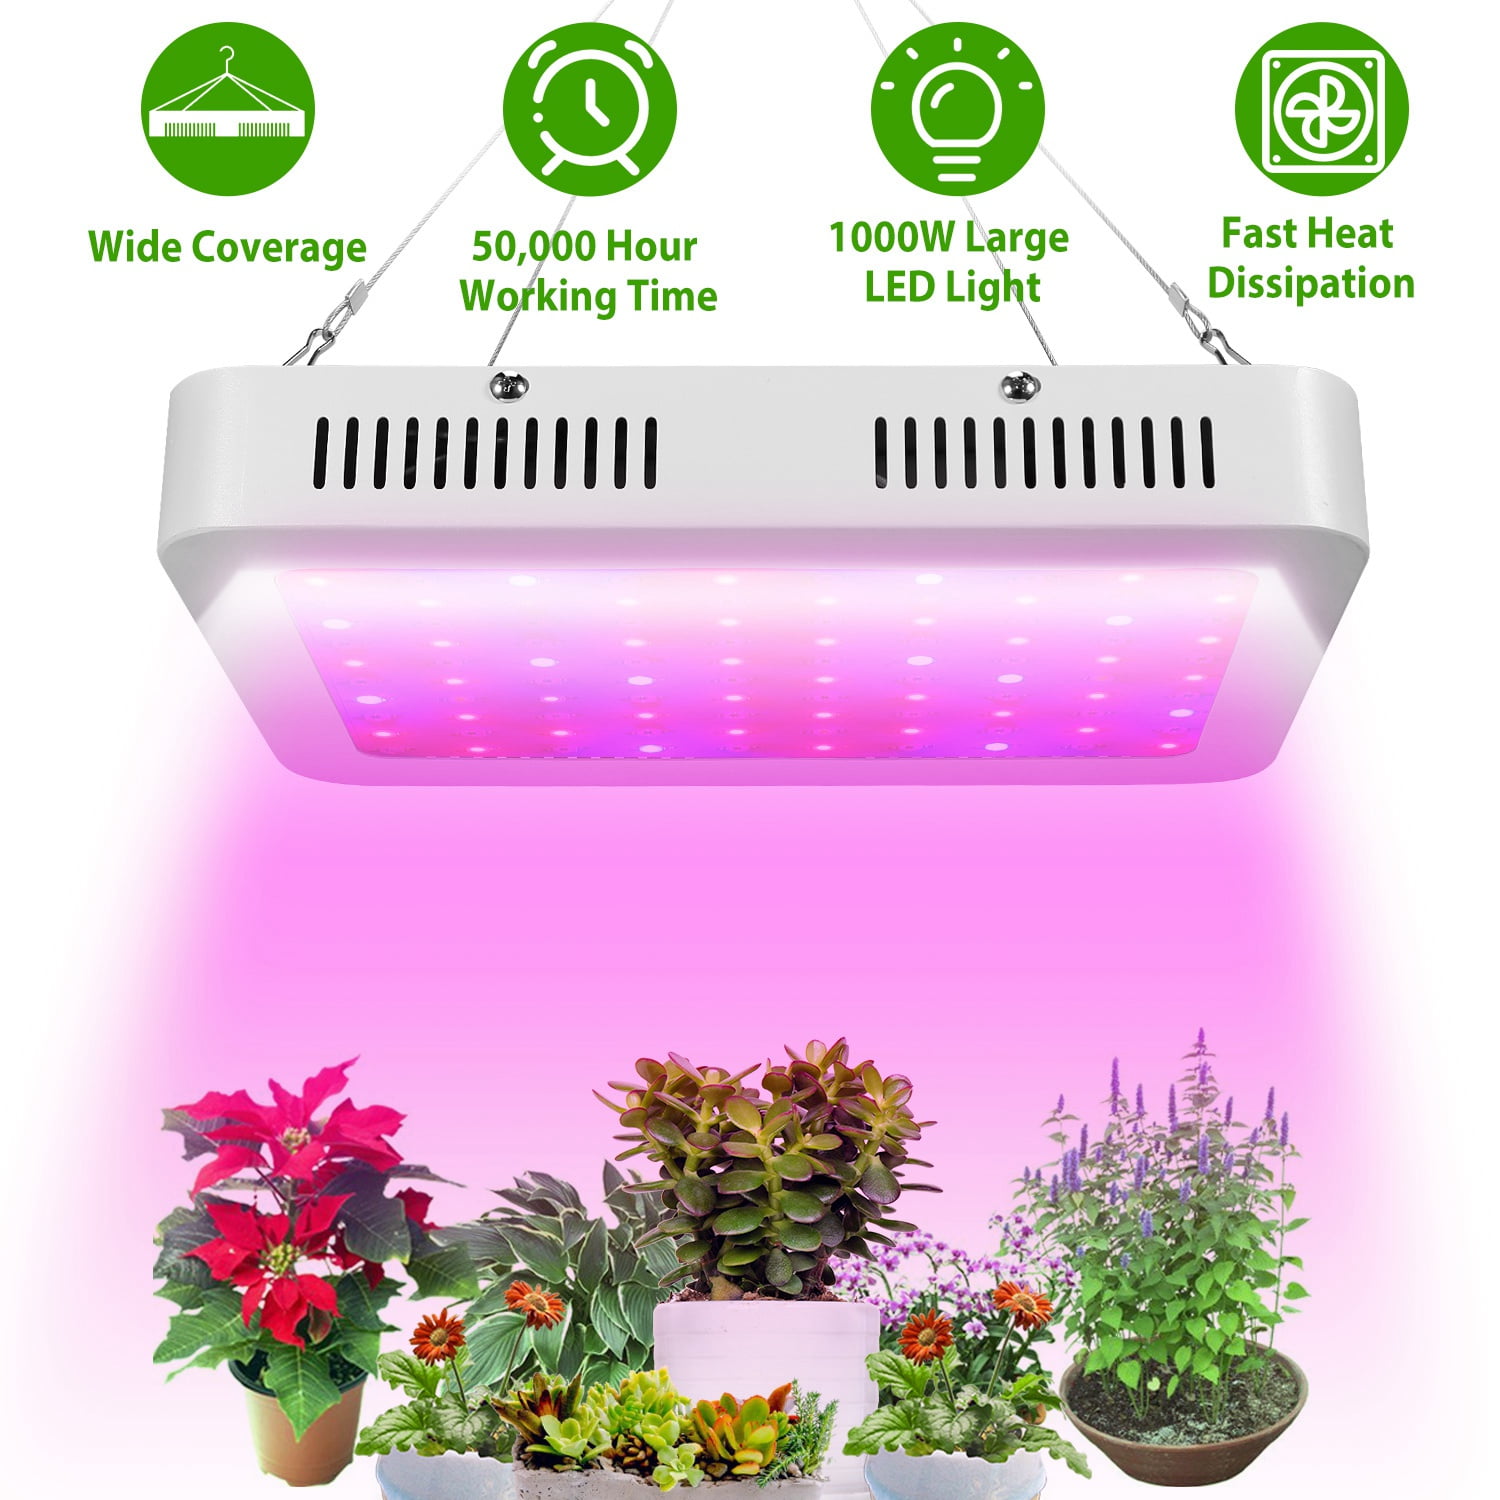 1000W LED COB Grow Light Full Spectrum Plant Lights for Hydroponic Indoor Plants 